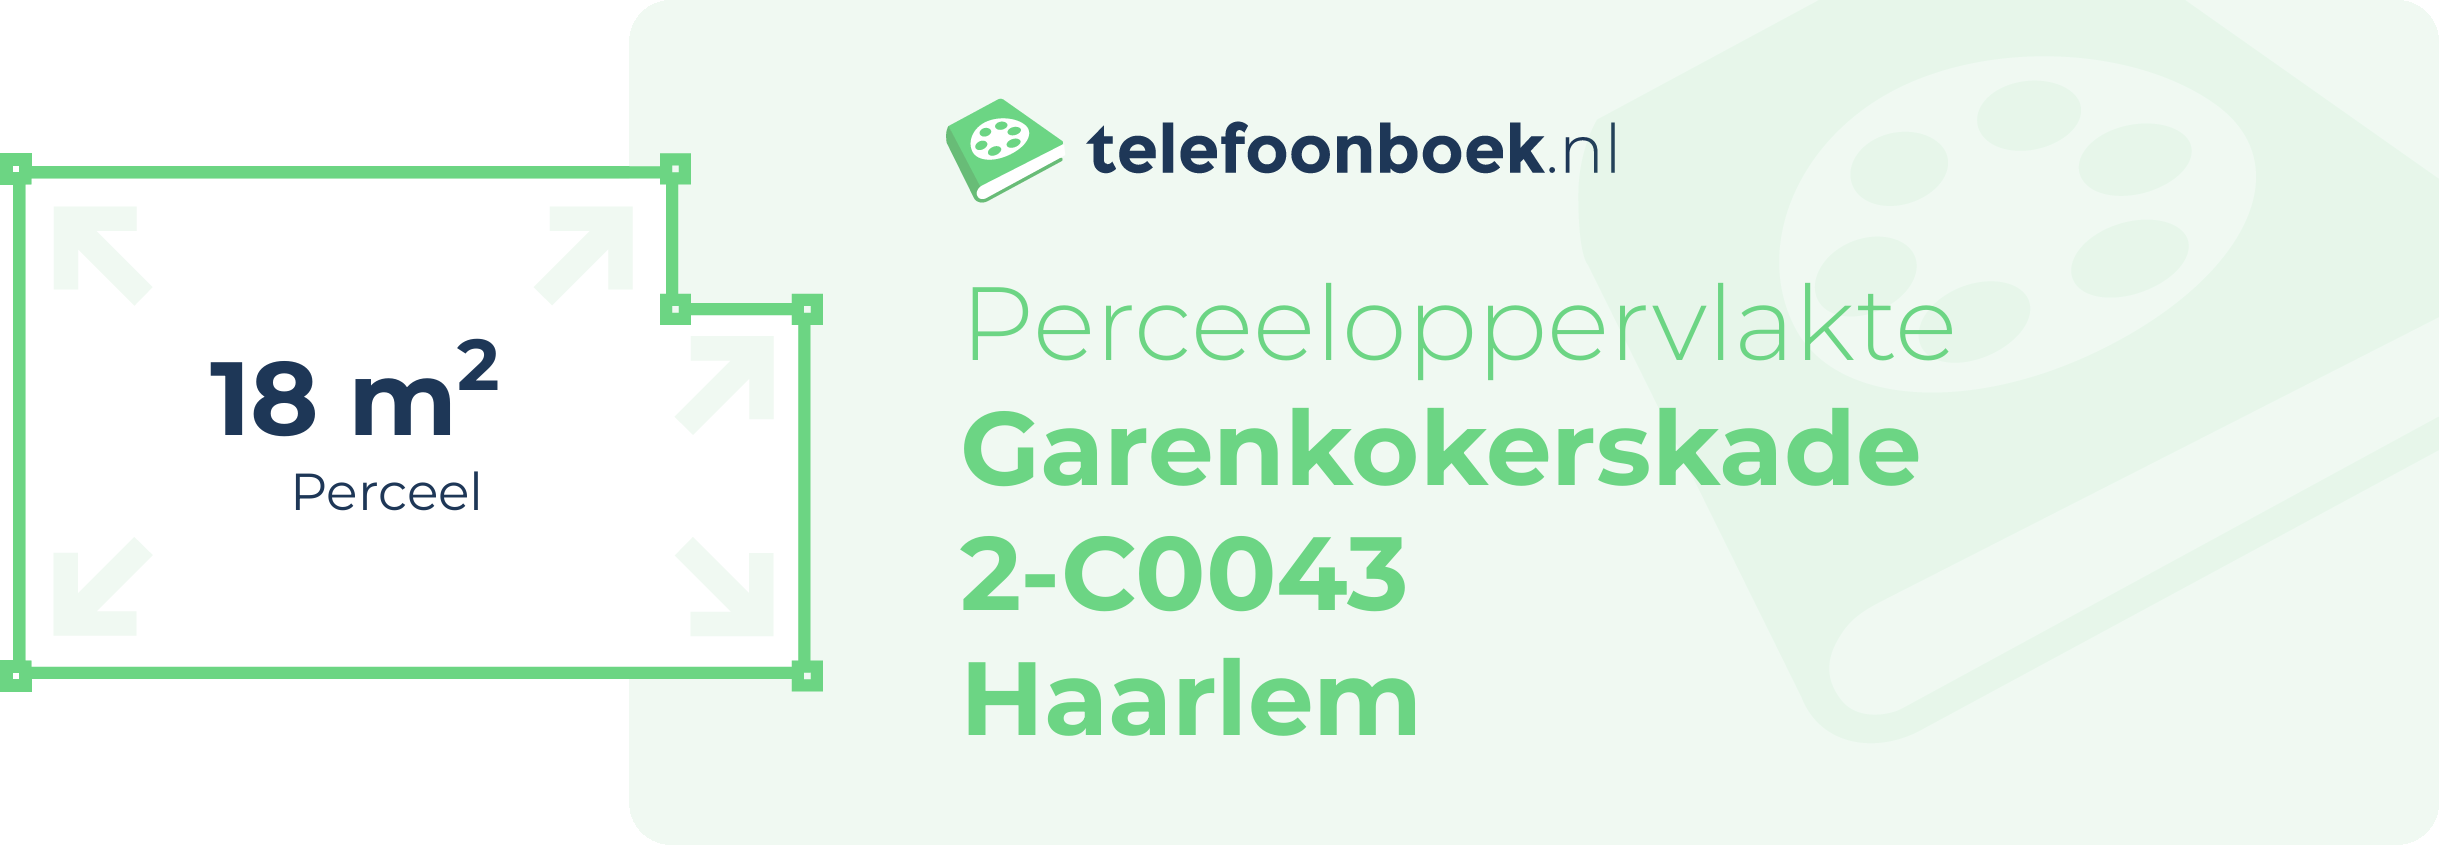 Perceeloppervlakte Garenkokerskade 2-C0043 Haarlem